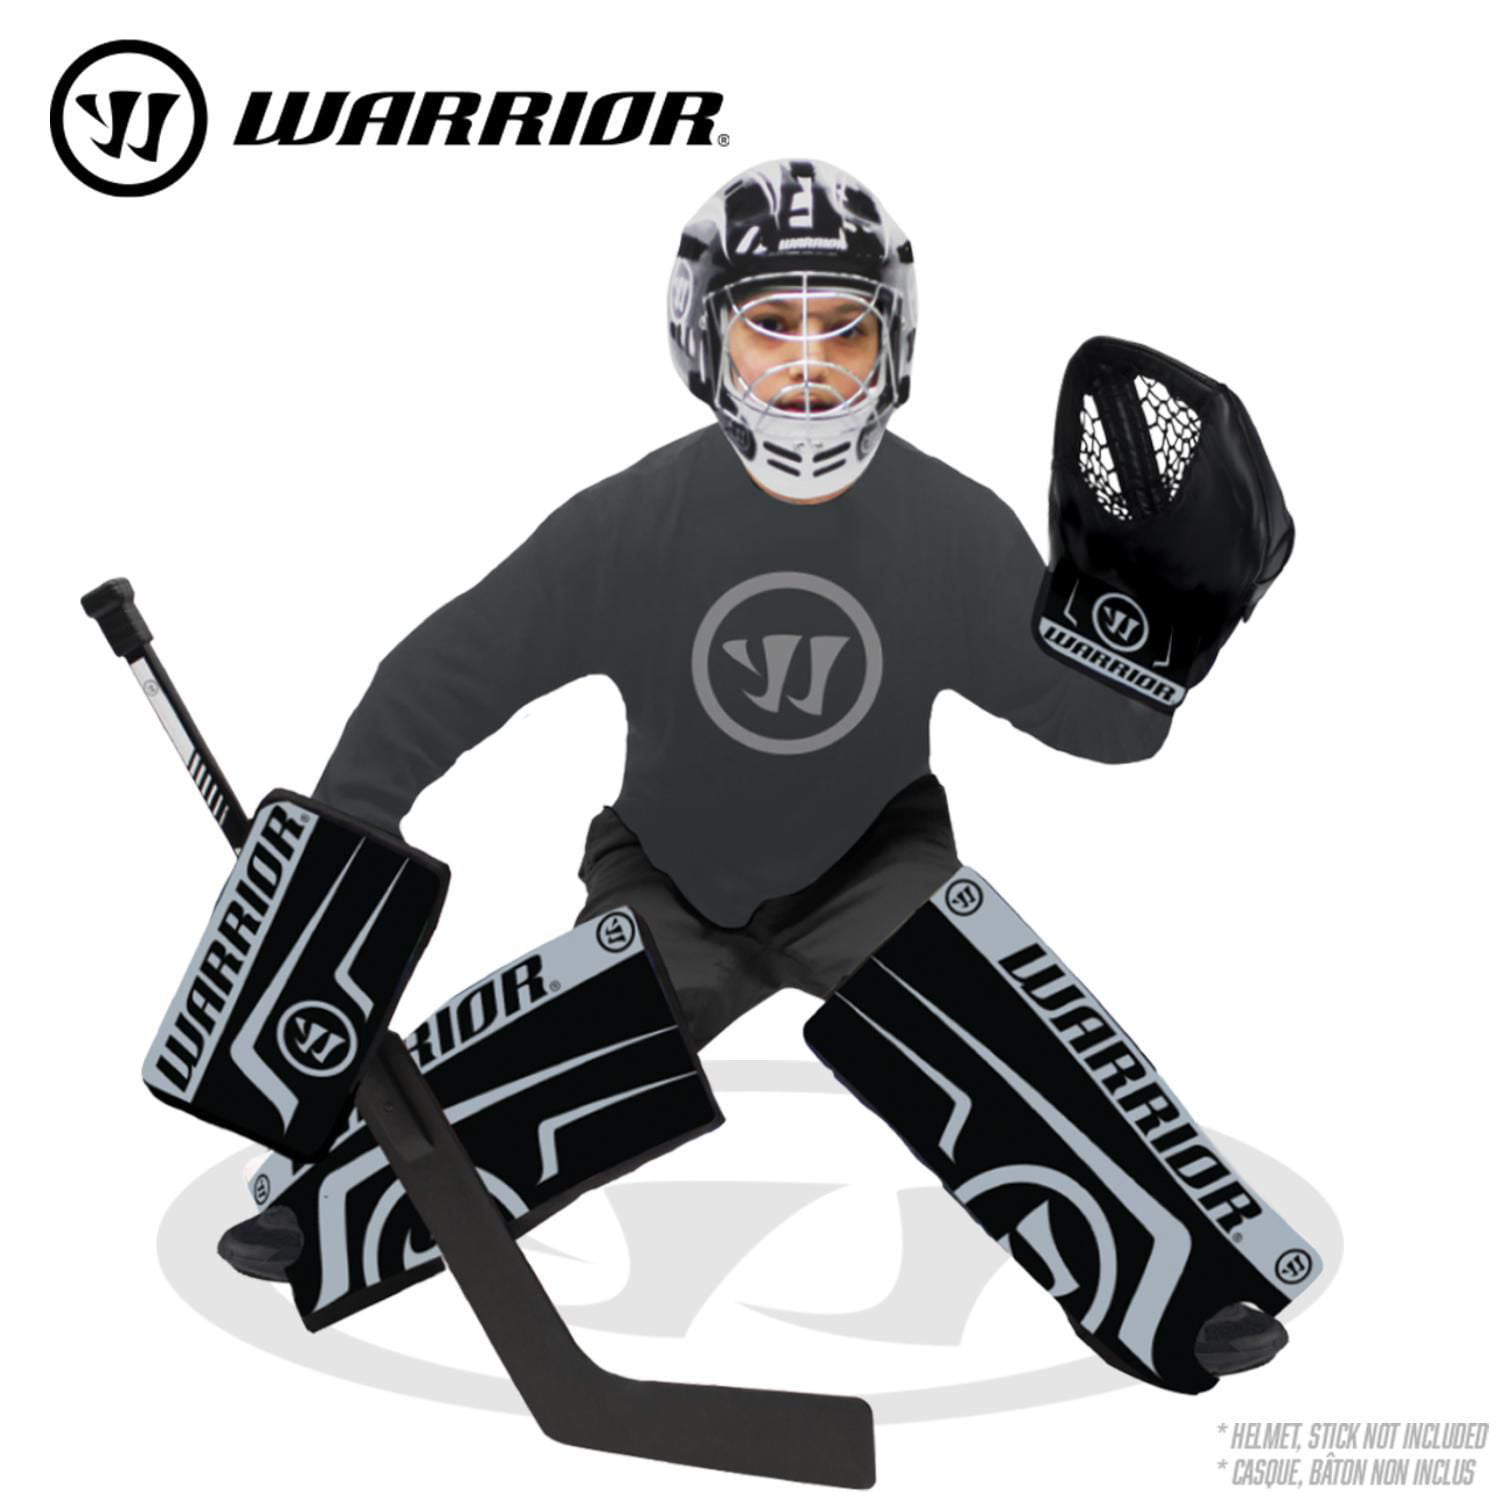 Hockey Goalie Gear, Warrior North America